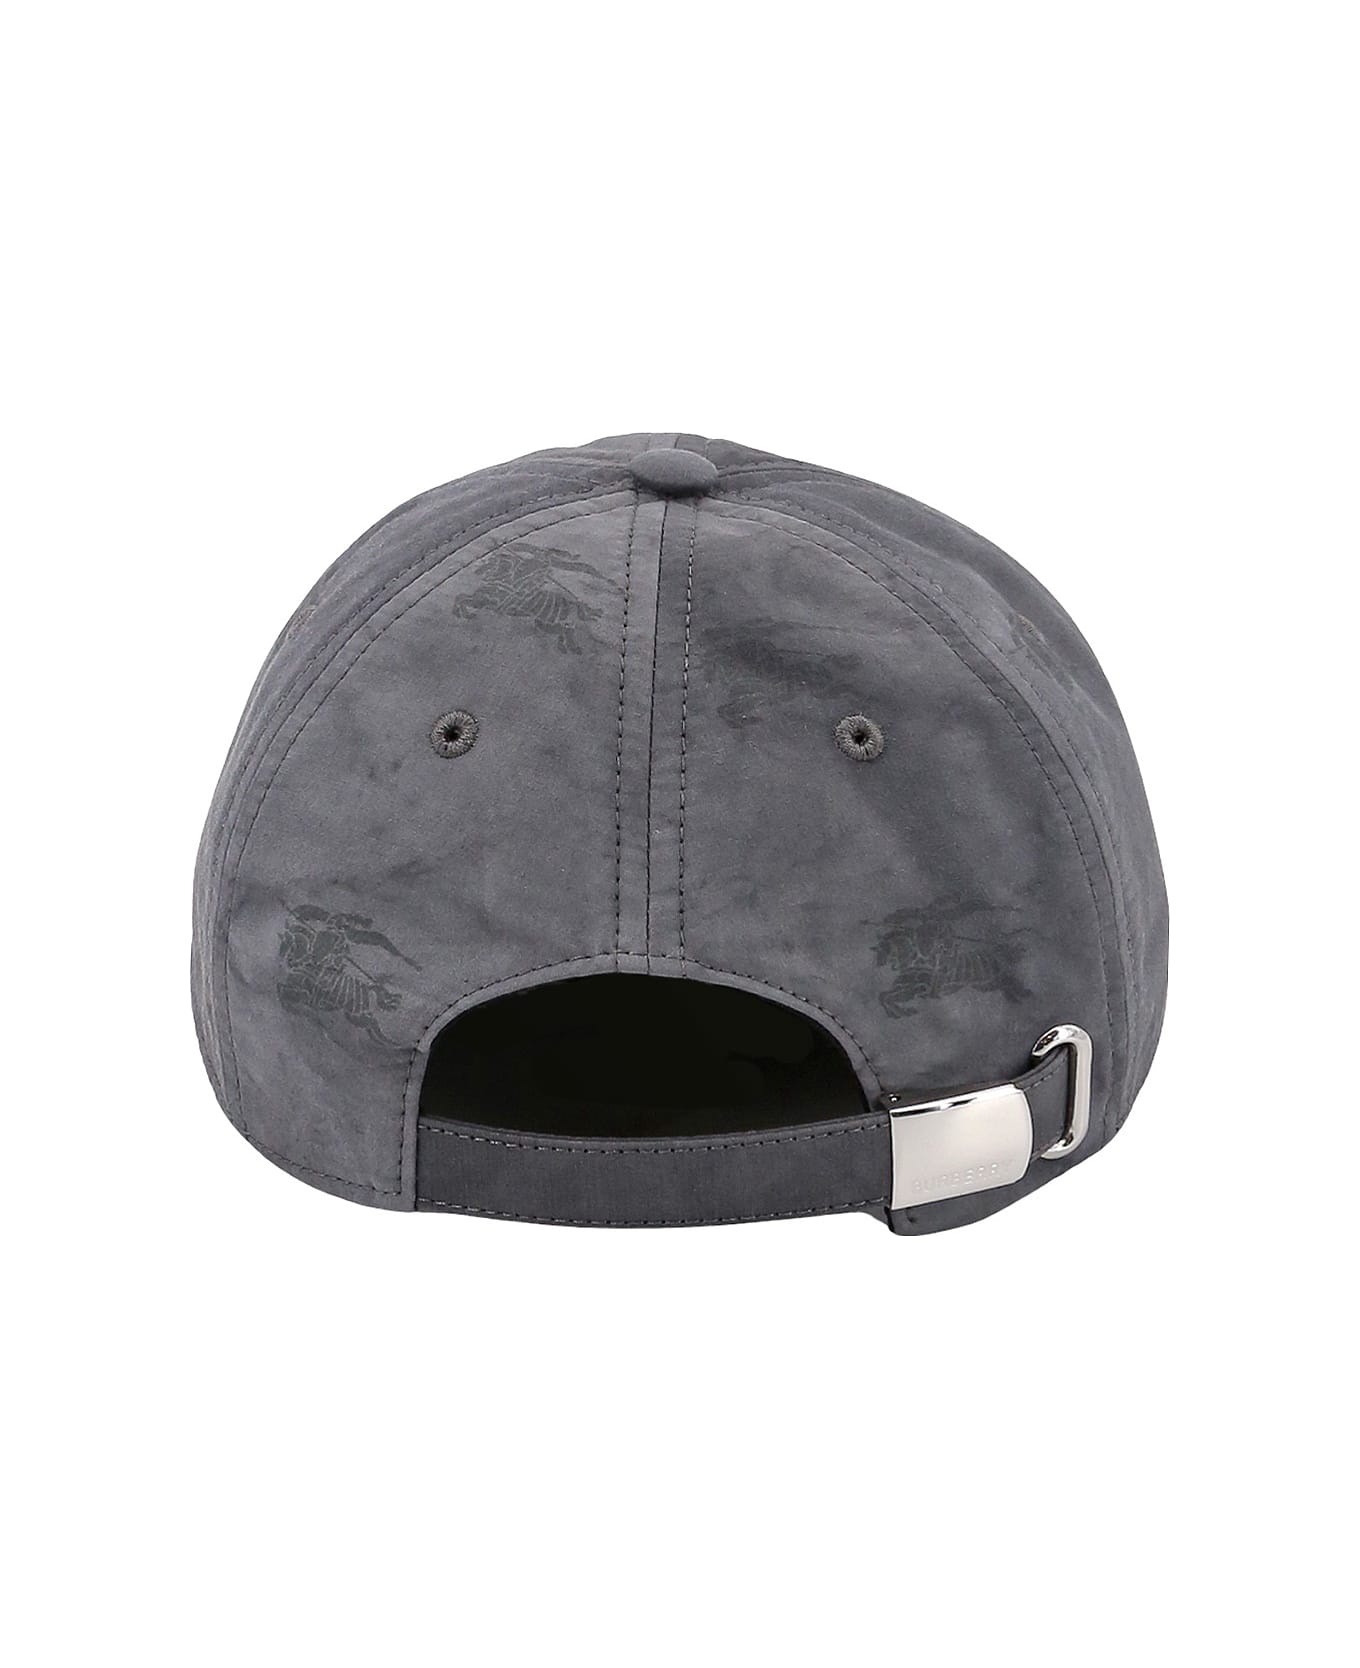 Burberry Hat - Grey 帽子